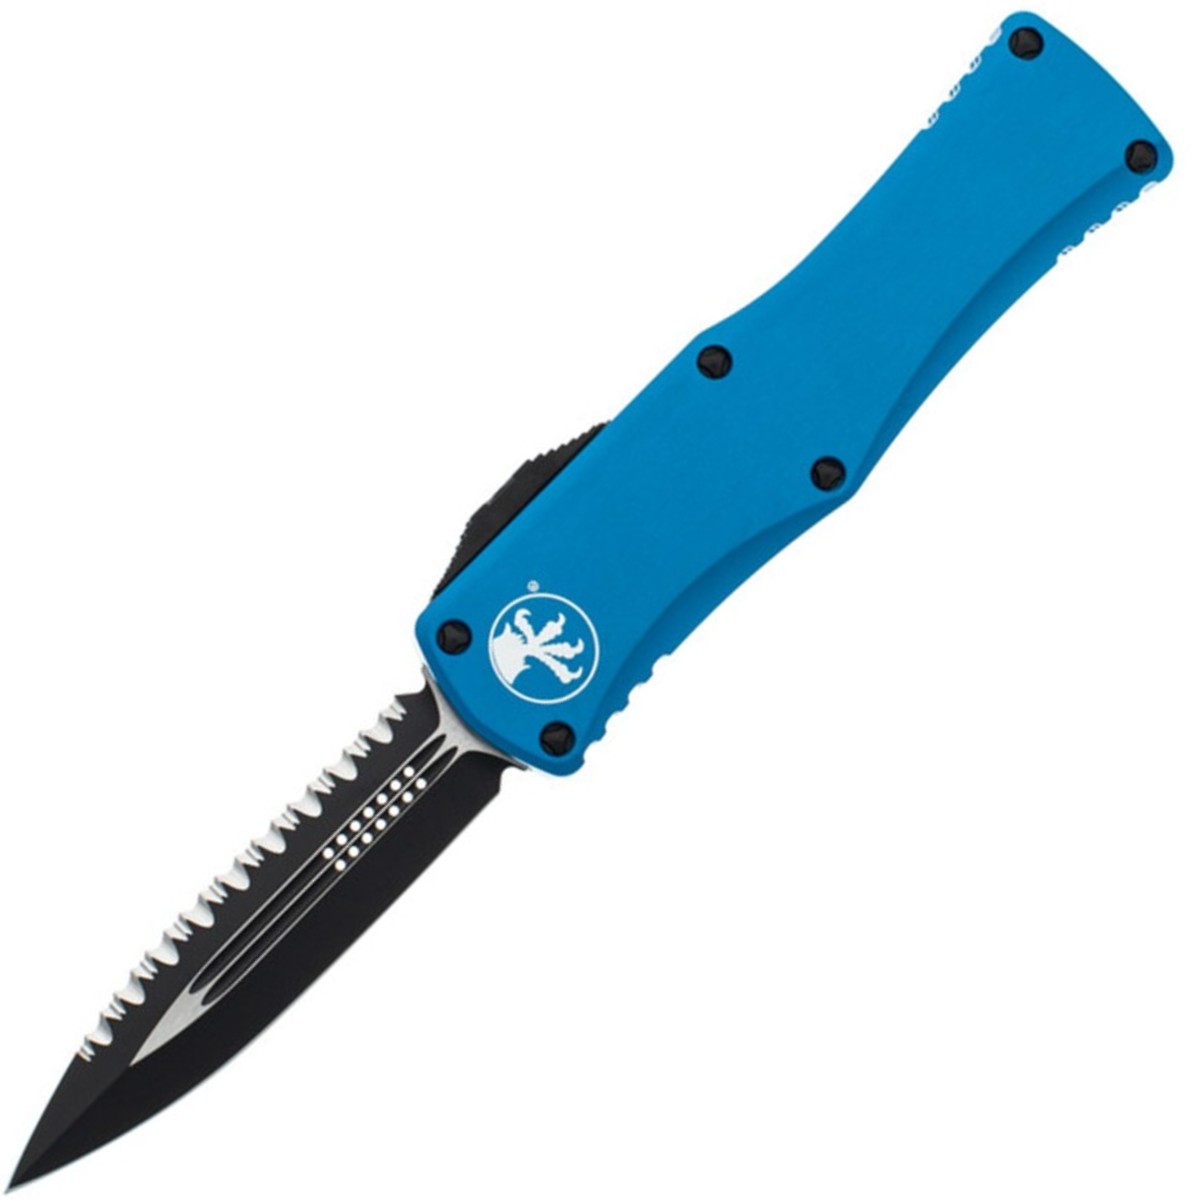 Microtech-Hera-D/E-Blue-Handle-Black-Blade-702-3BL